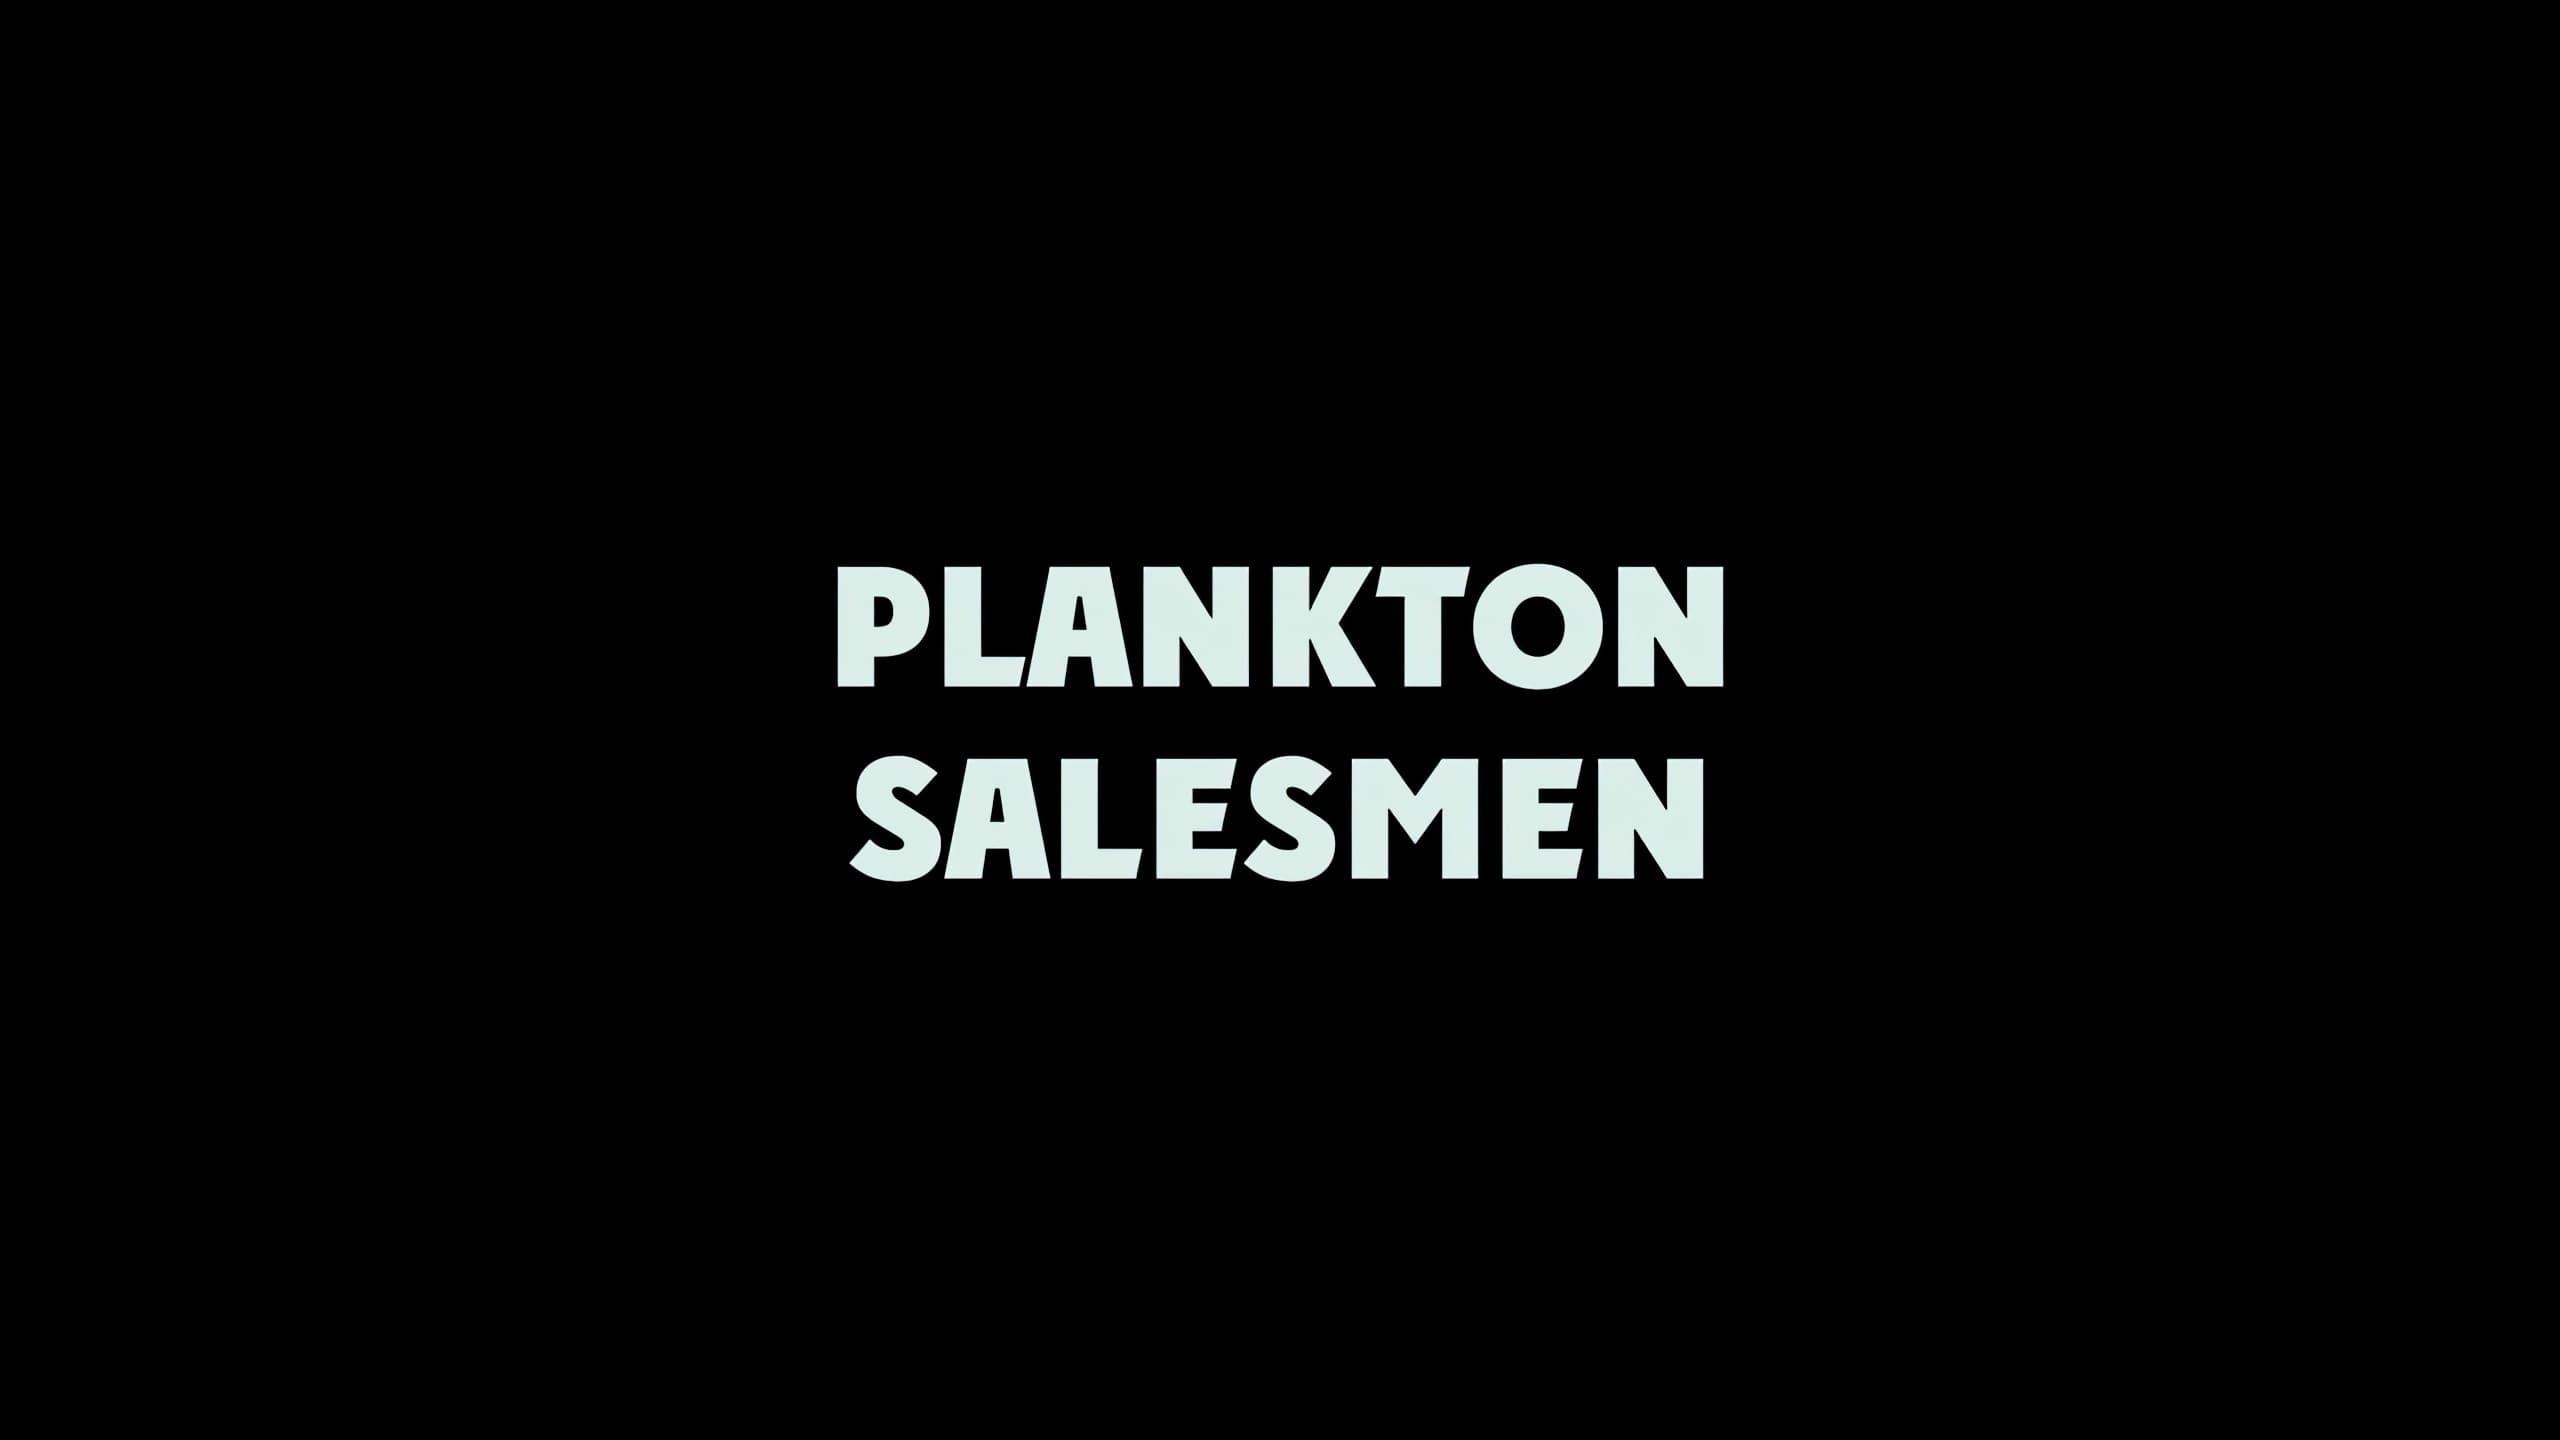 Plankton Salesmen backdrop